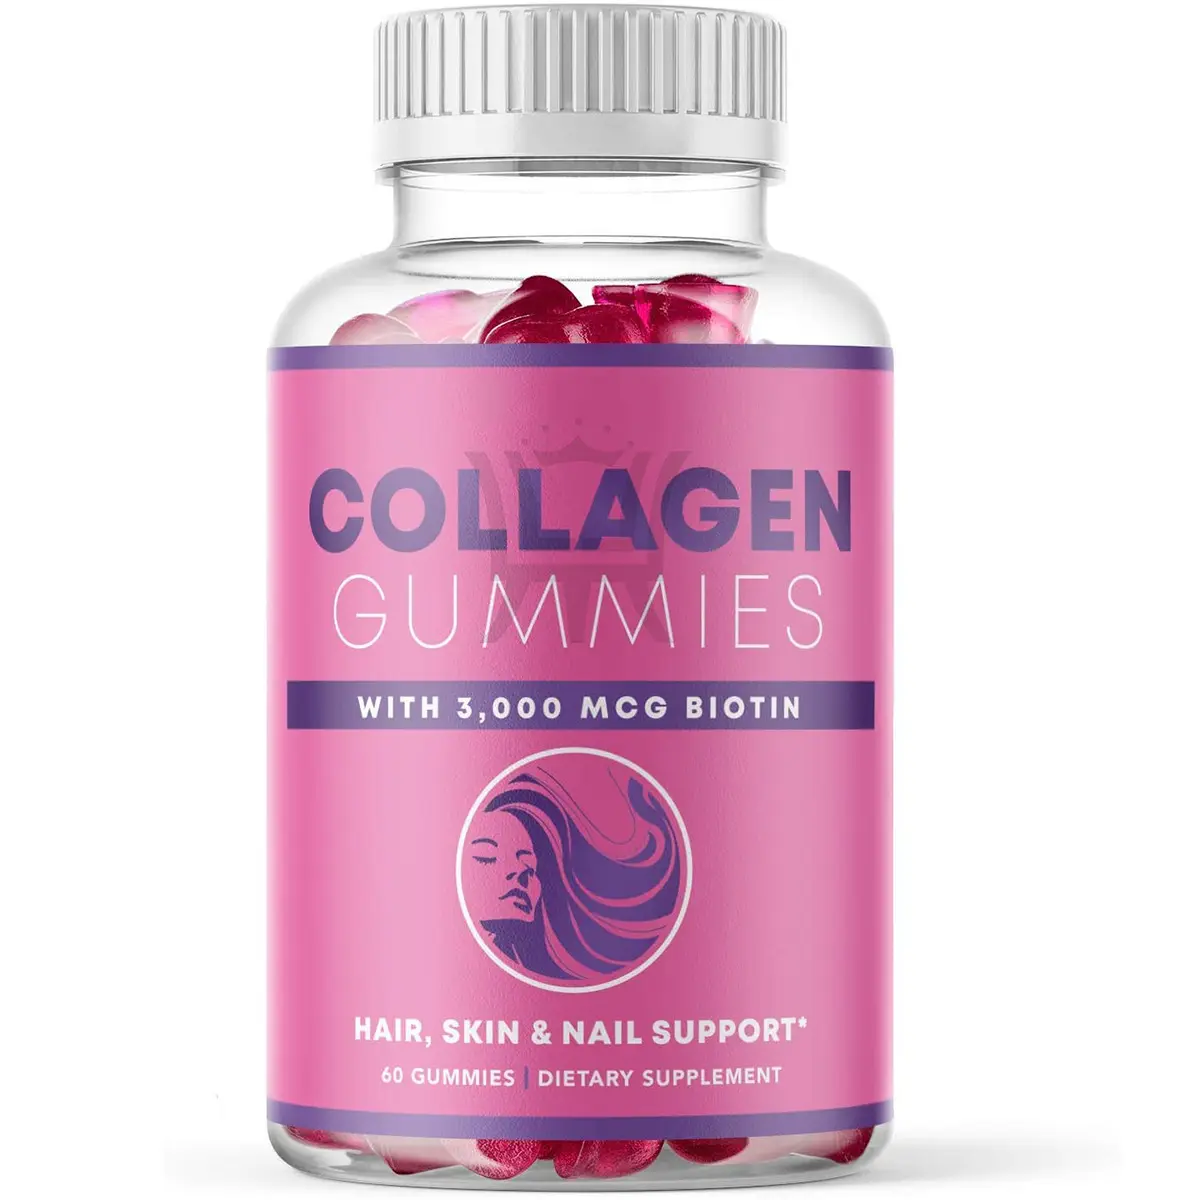 Healthcare supplement Anti Aging vegan pectin collagen gummies collagen for Hair Skin Nails